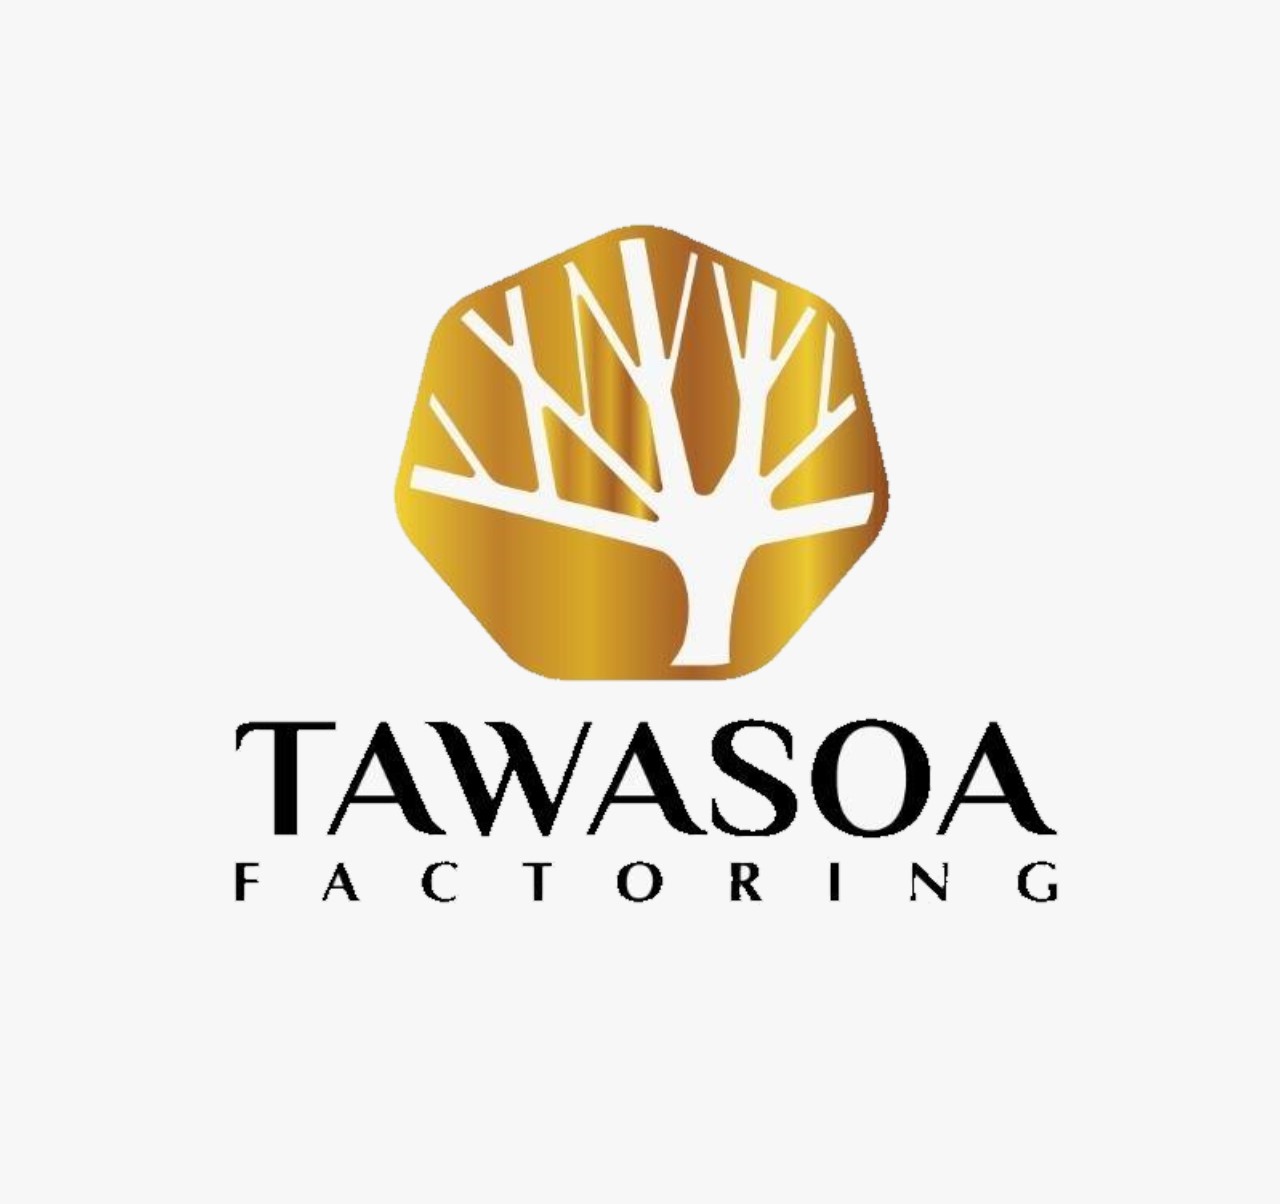 Tawasoa Factoring